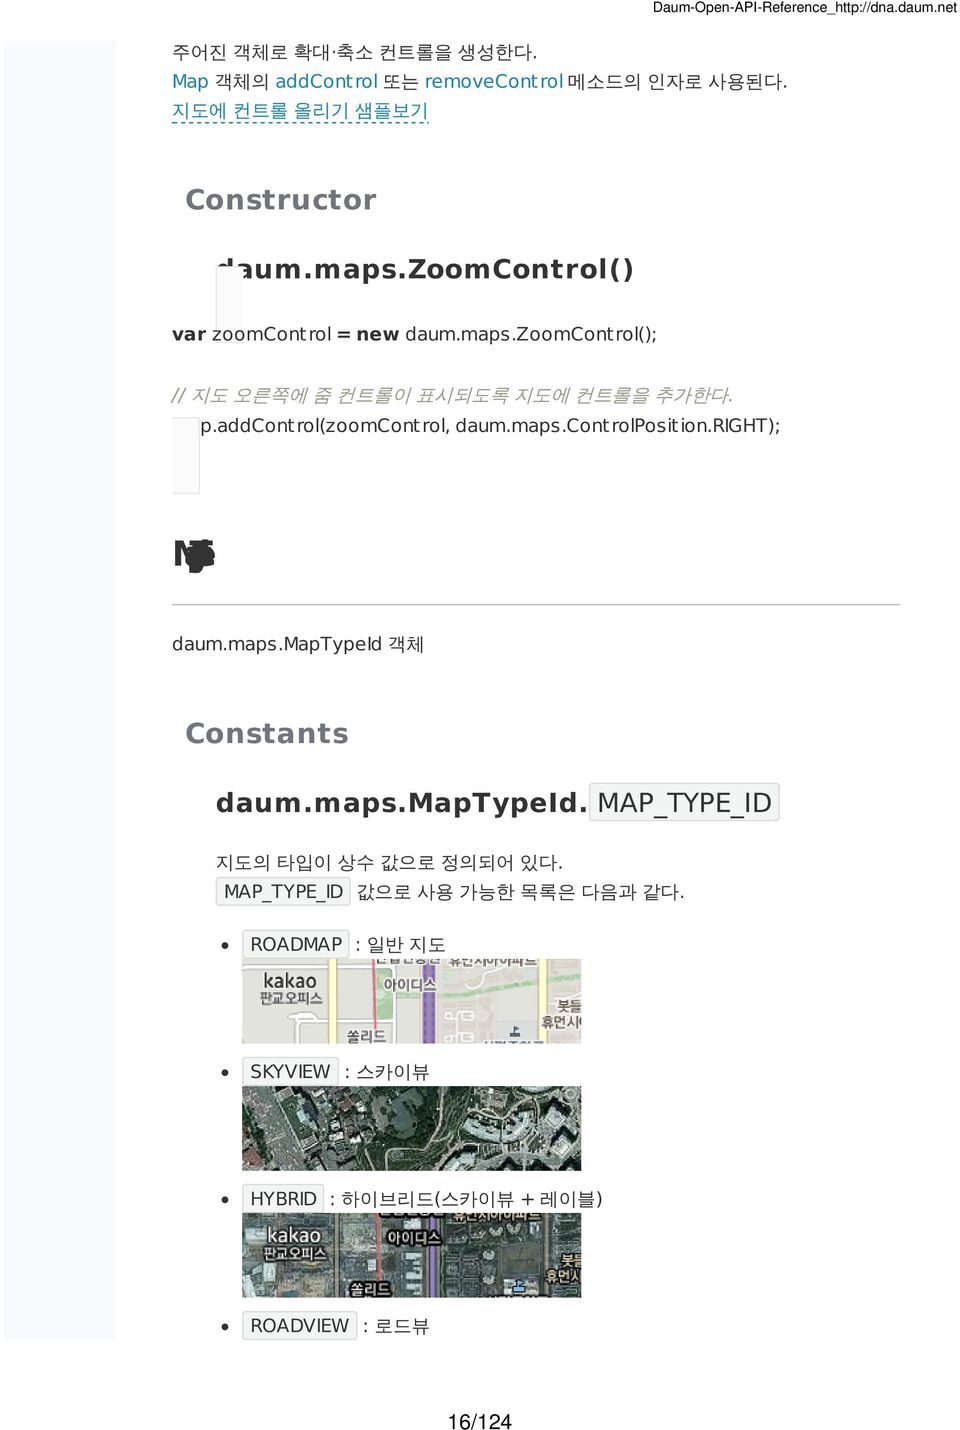 addcont rol(zoomcont rol, daum.maps.cont rolposit ion.right); MapTypeId daum.maps.maptypeid 